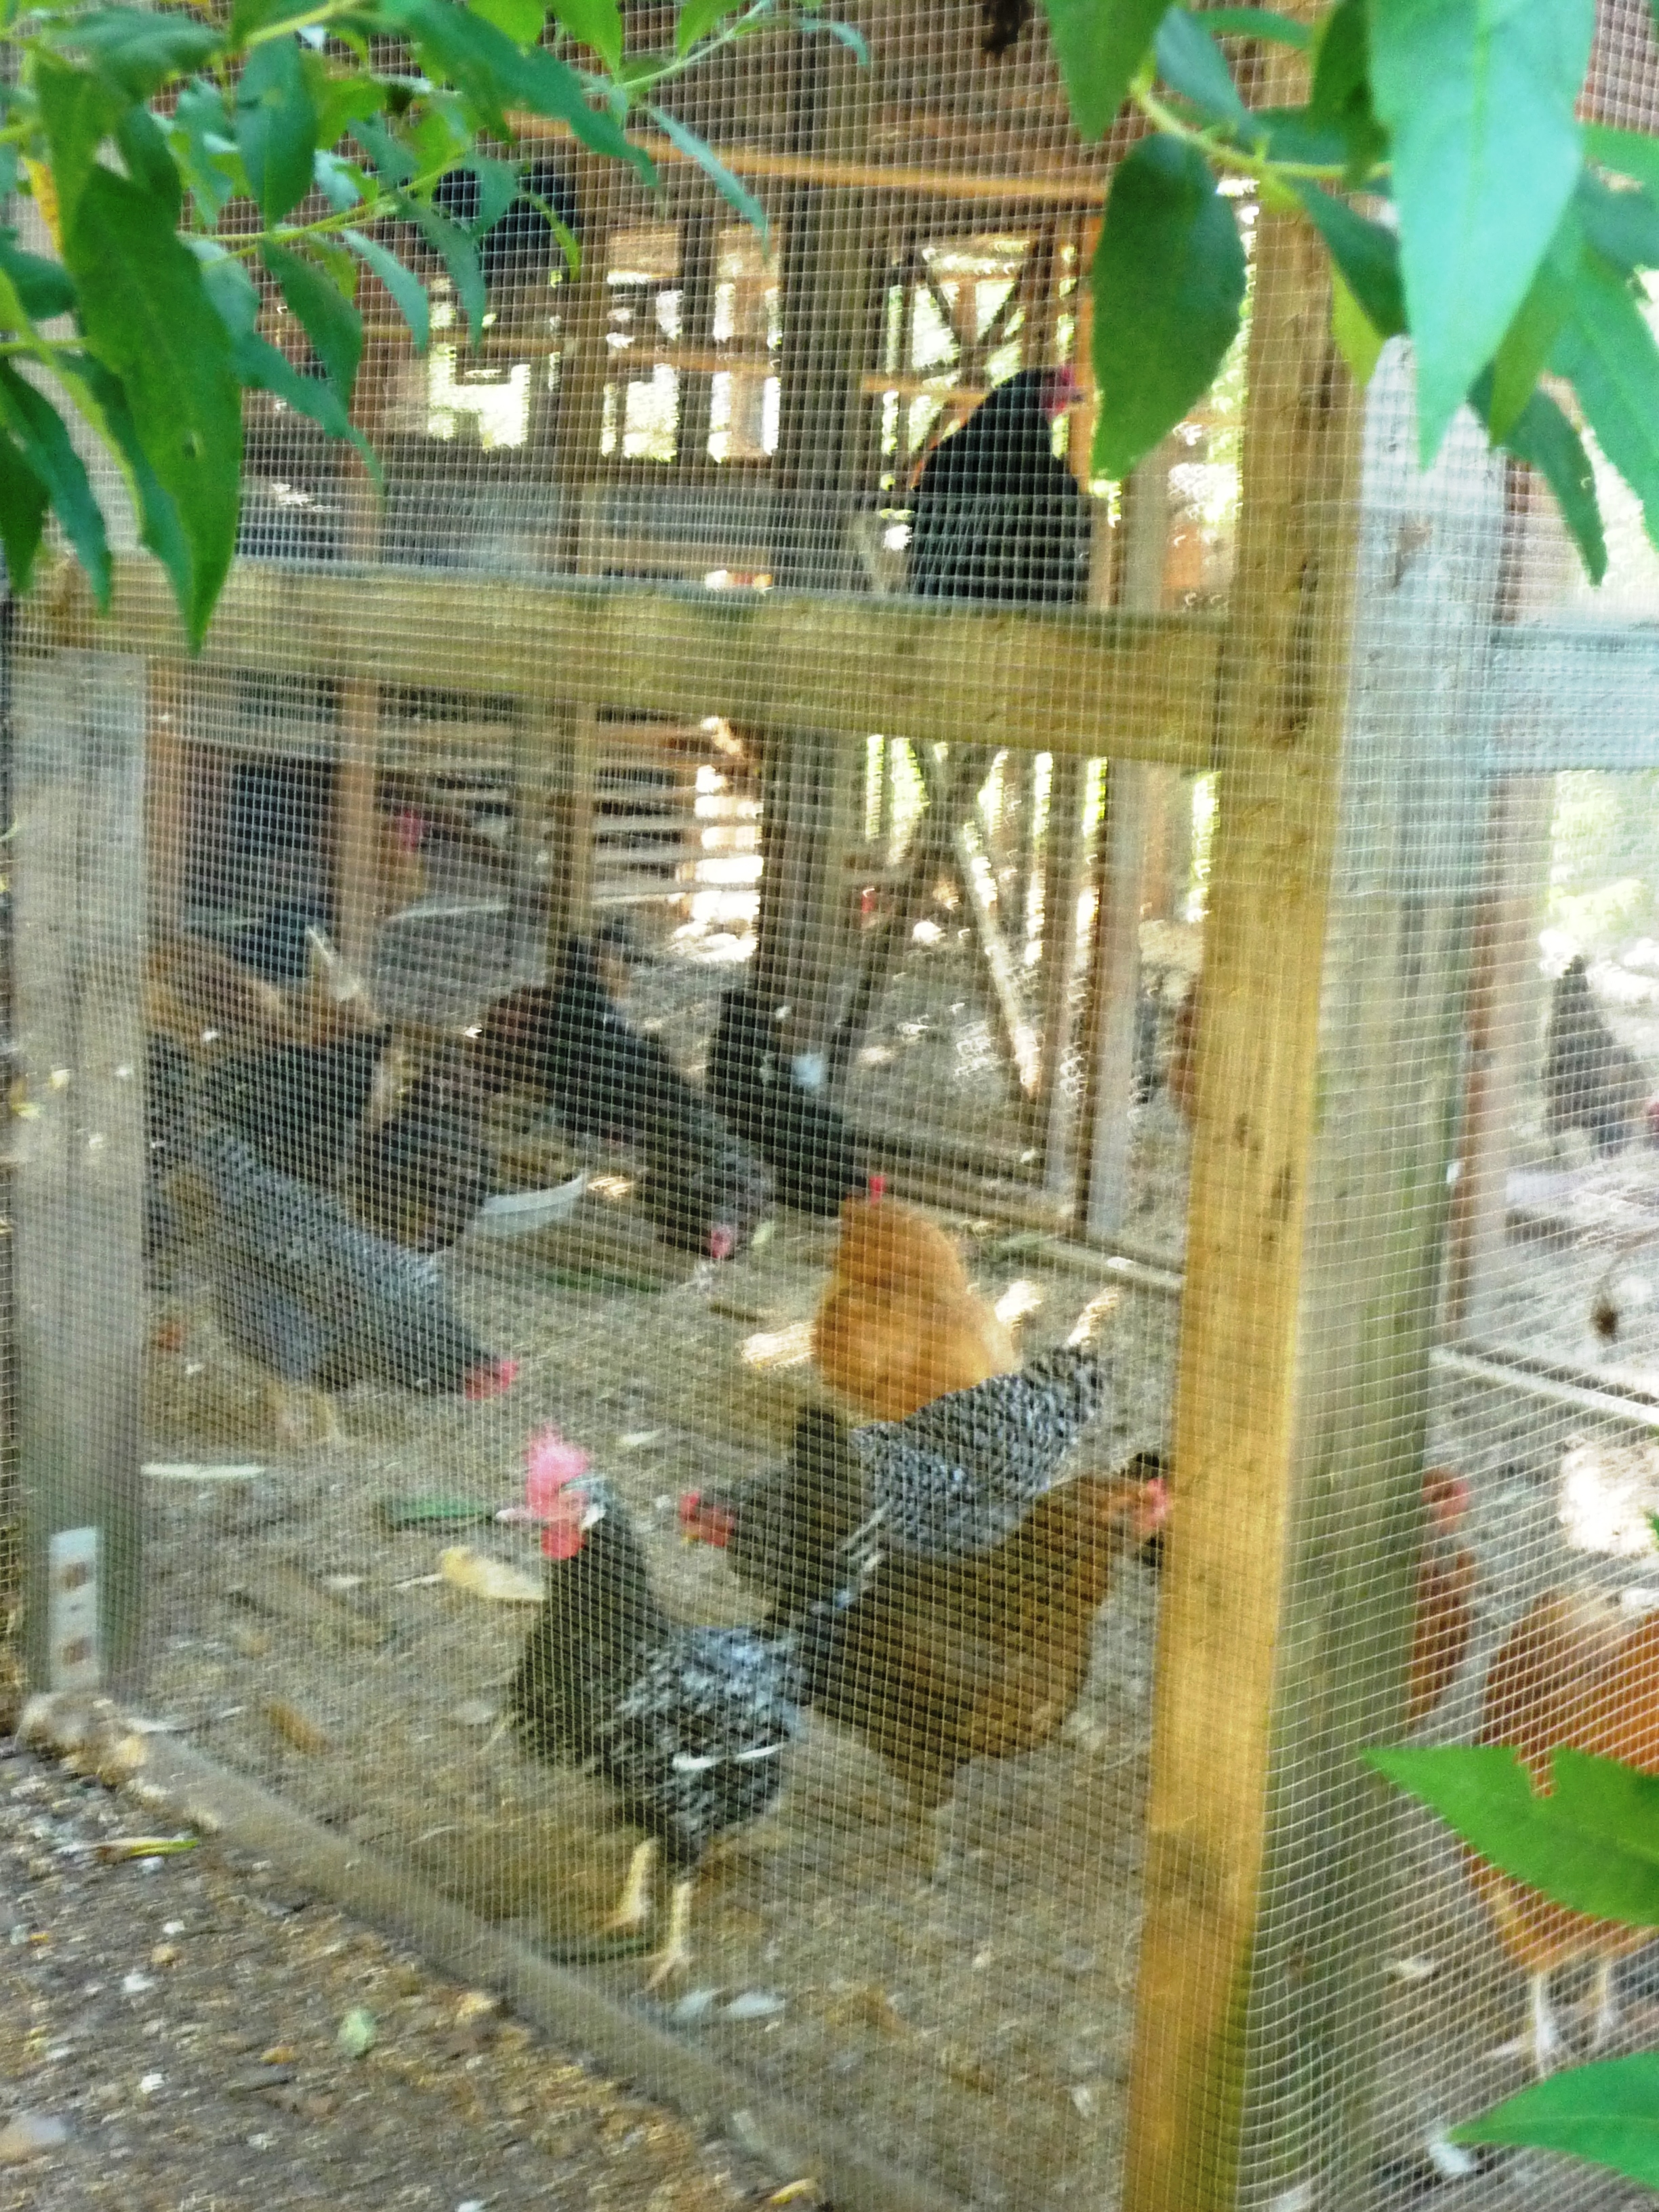 Chickens at the Meadowlark inn